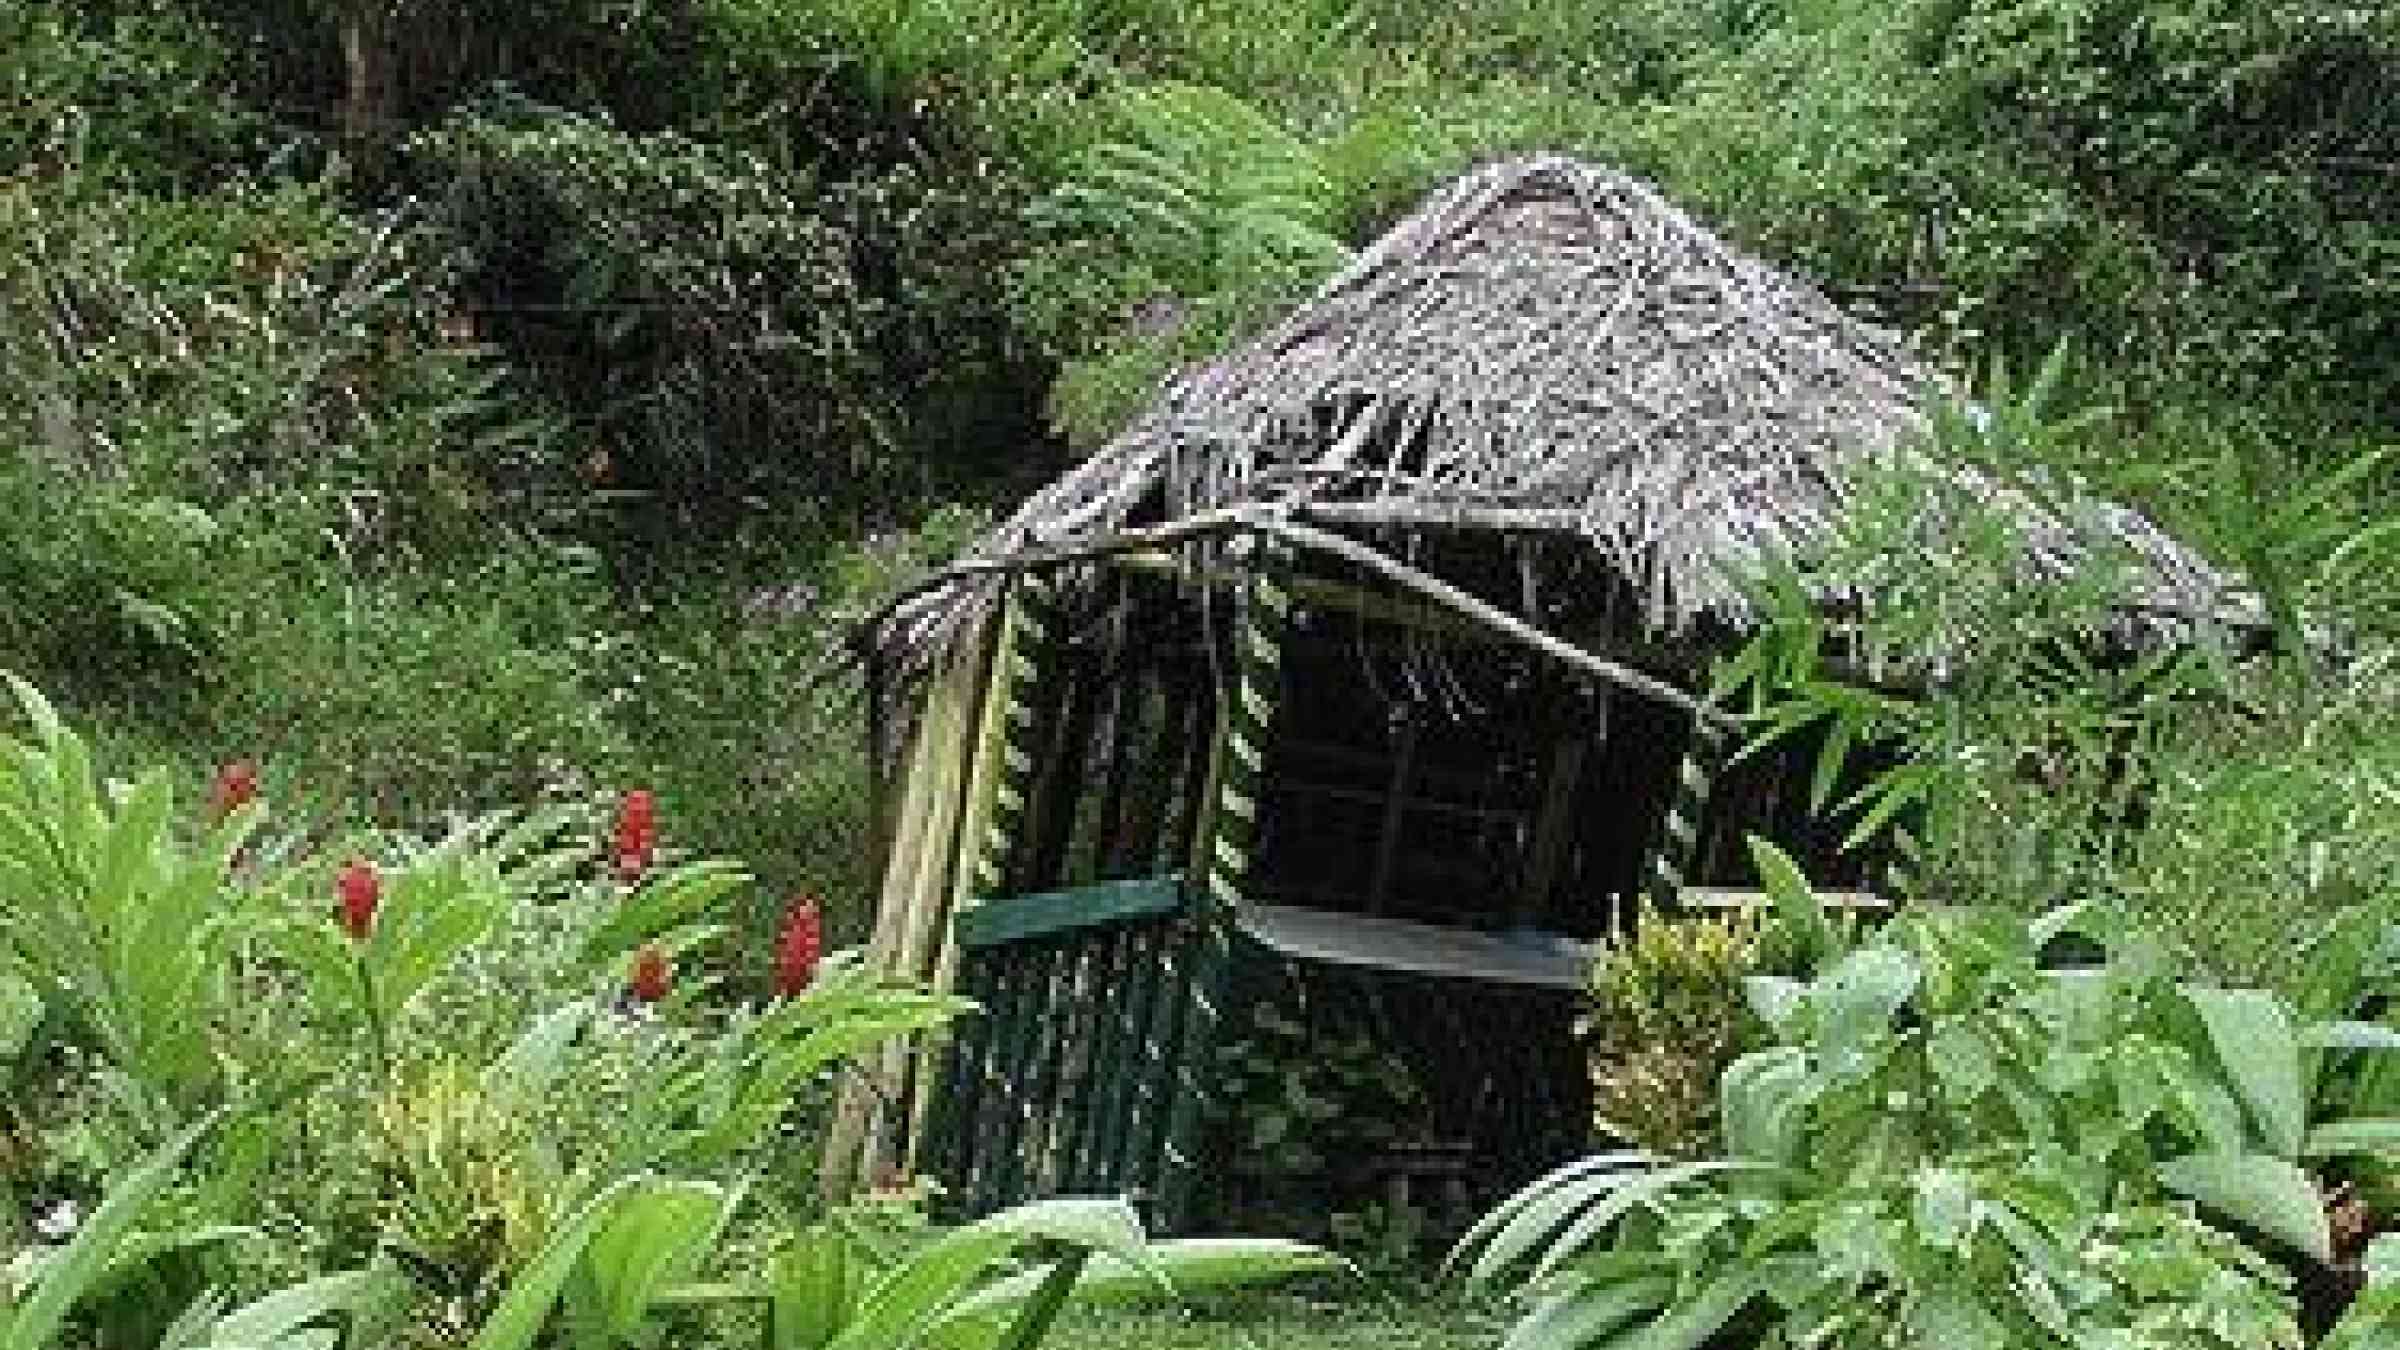 windswept Jamaican hut by Edu-Tourist, CC BY-SA 2.0, http://www.flickr.com/photos/mdorn/20758885/